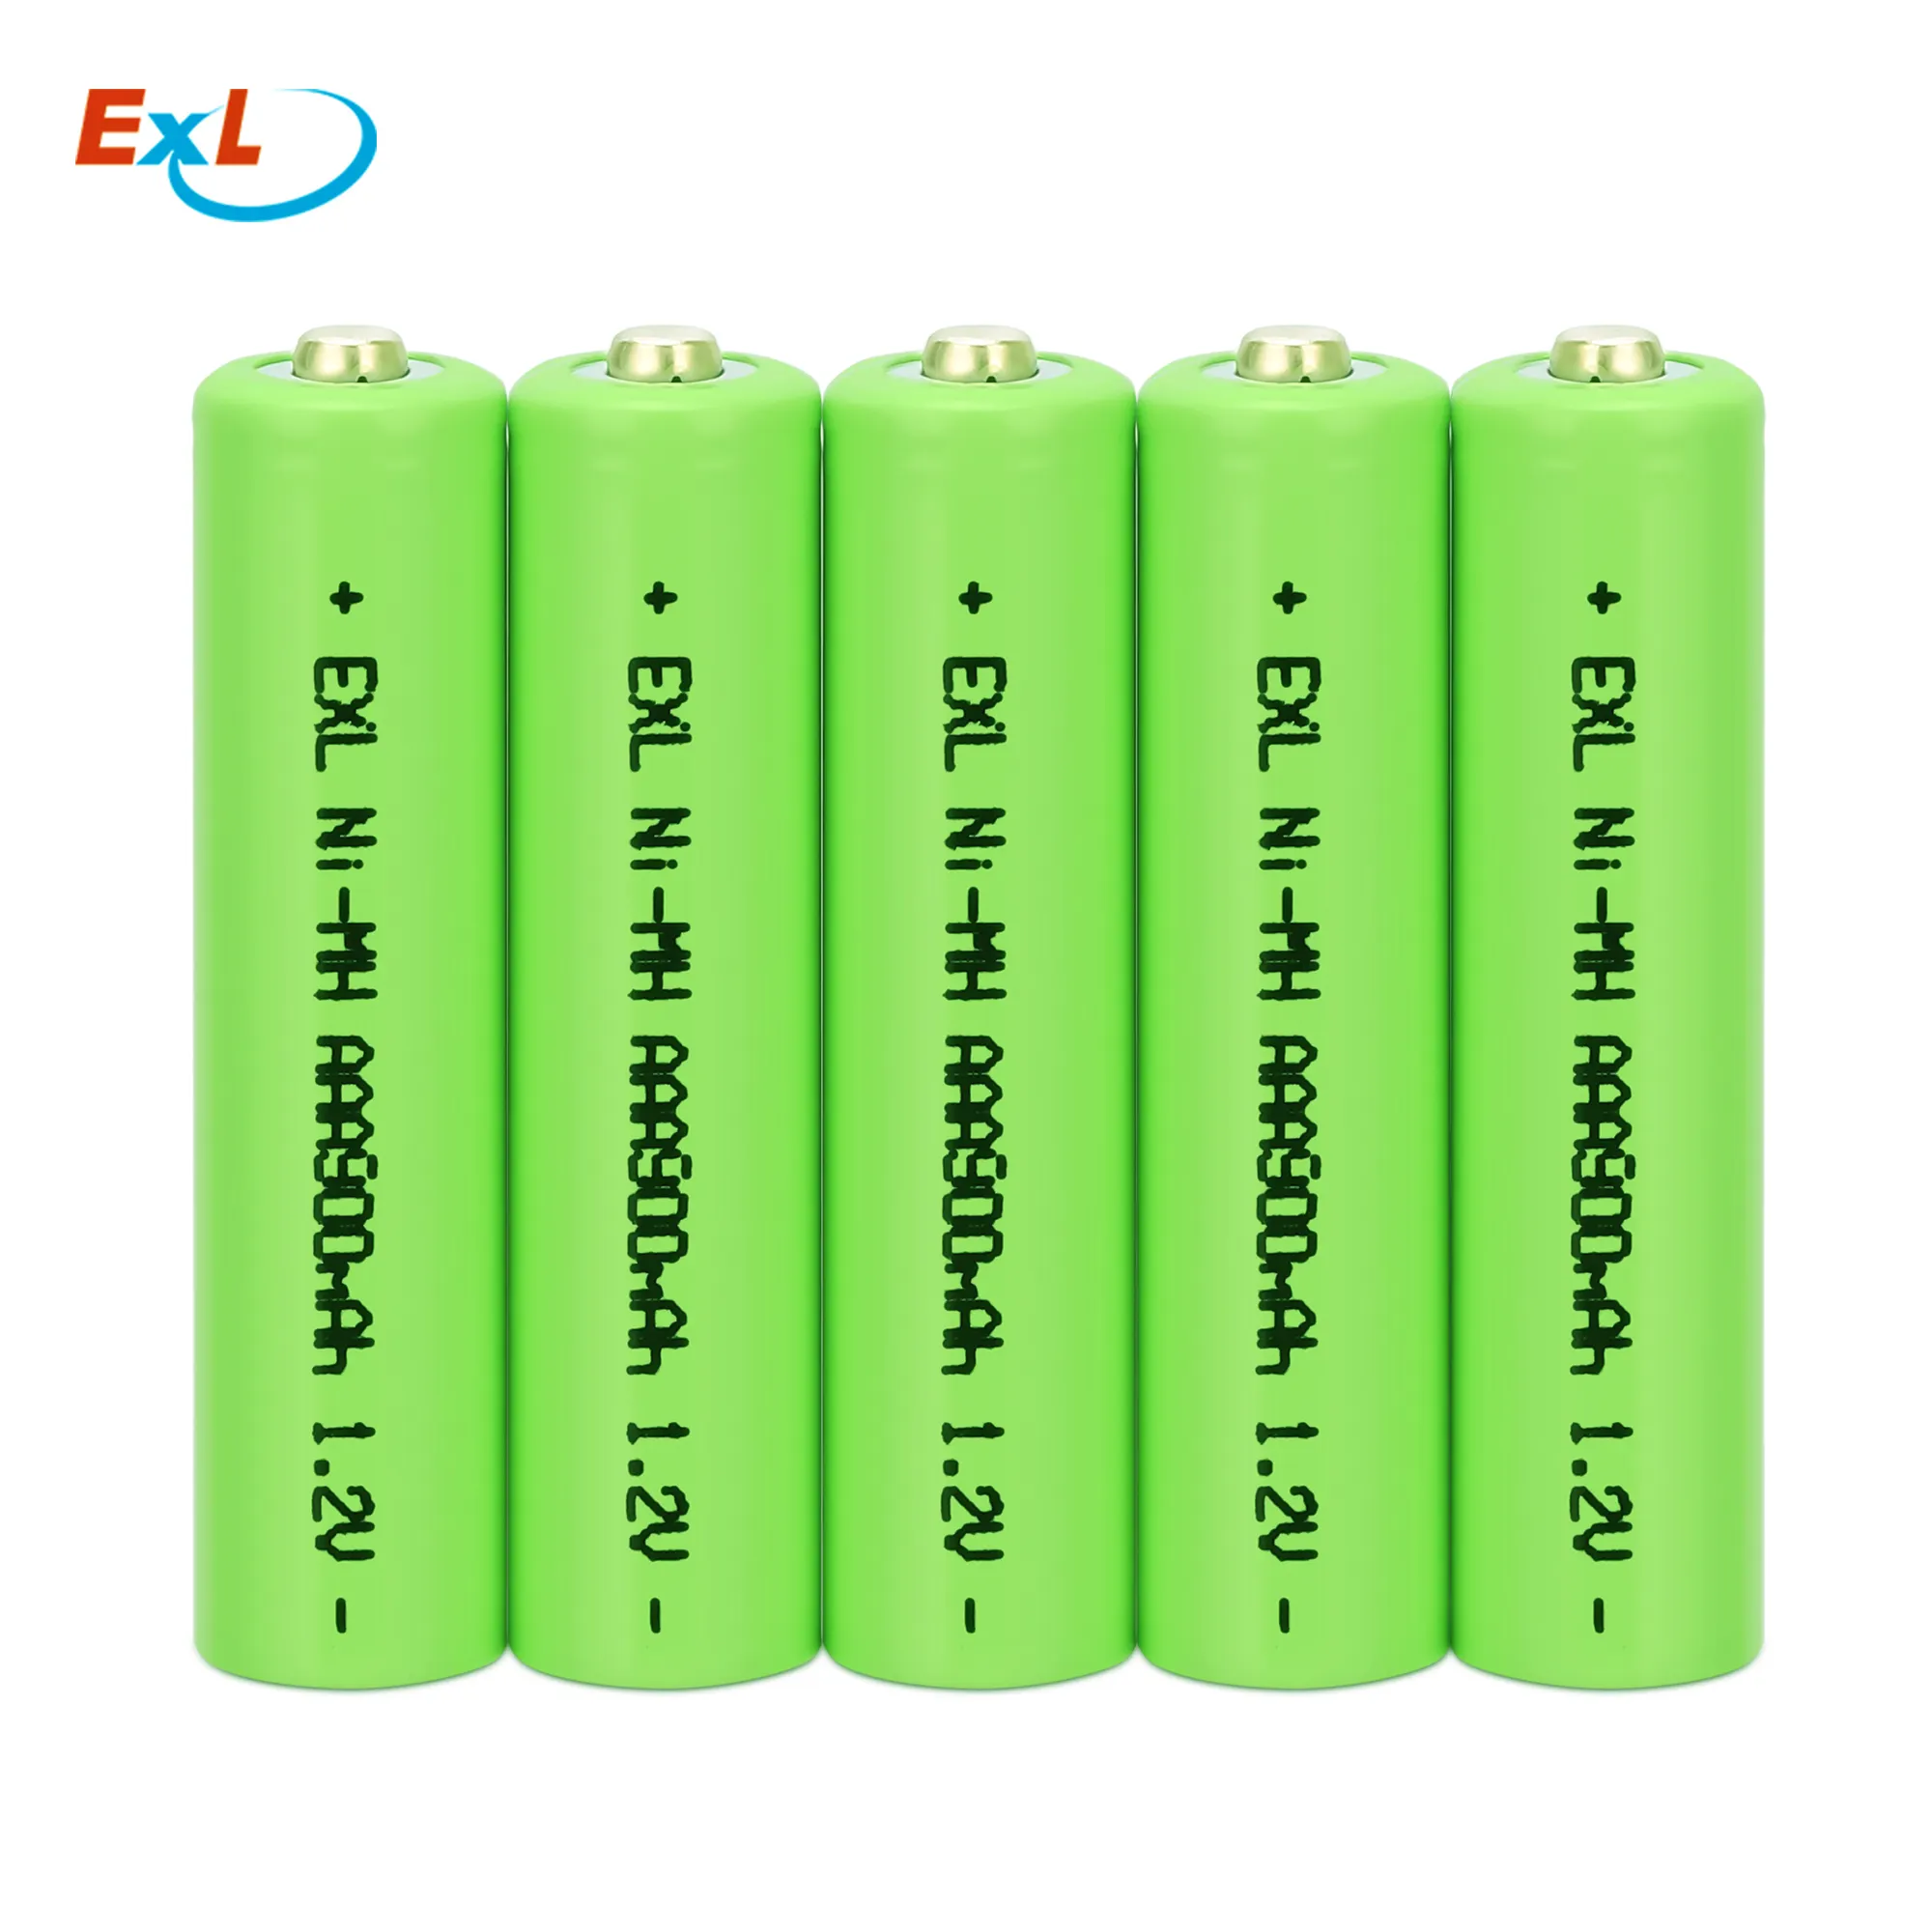 Rechargeable AAA Batteries